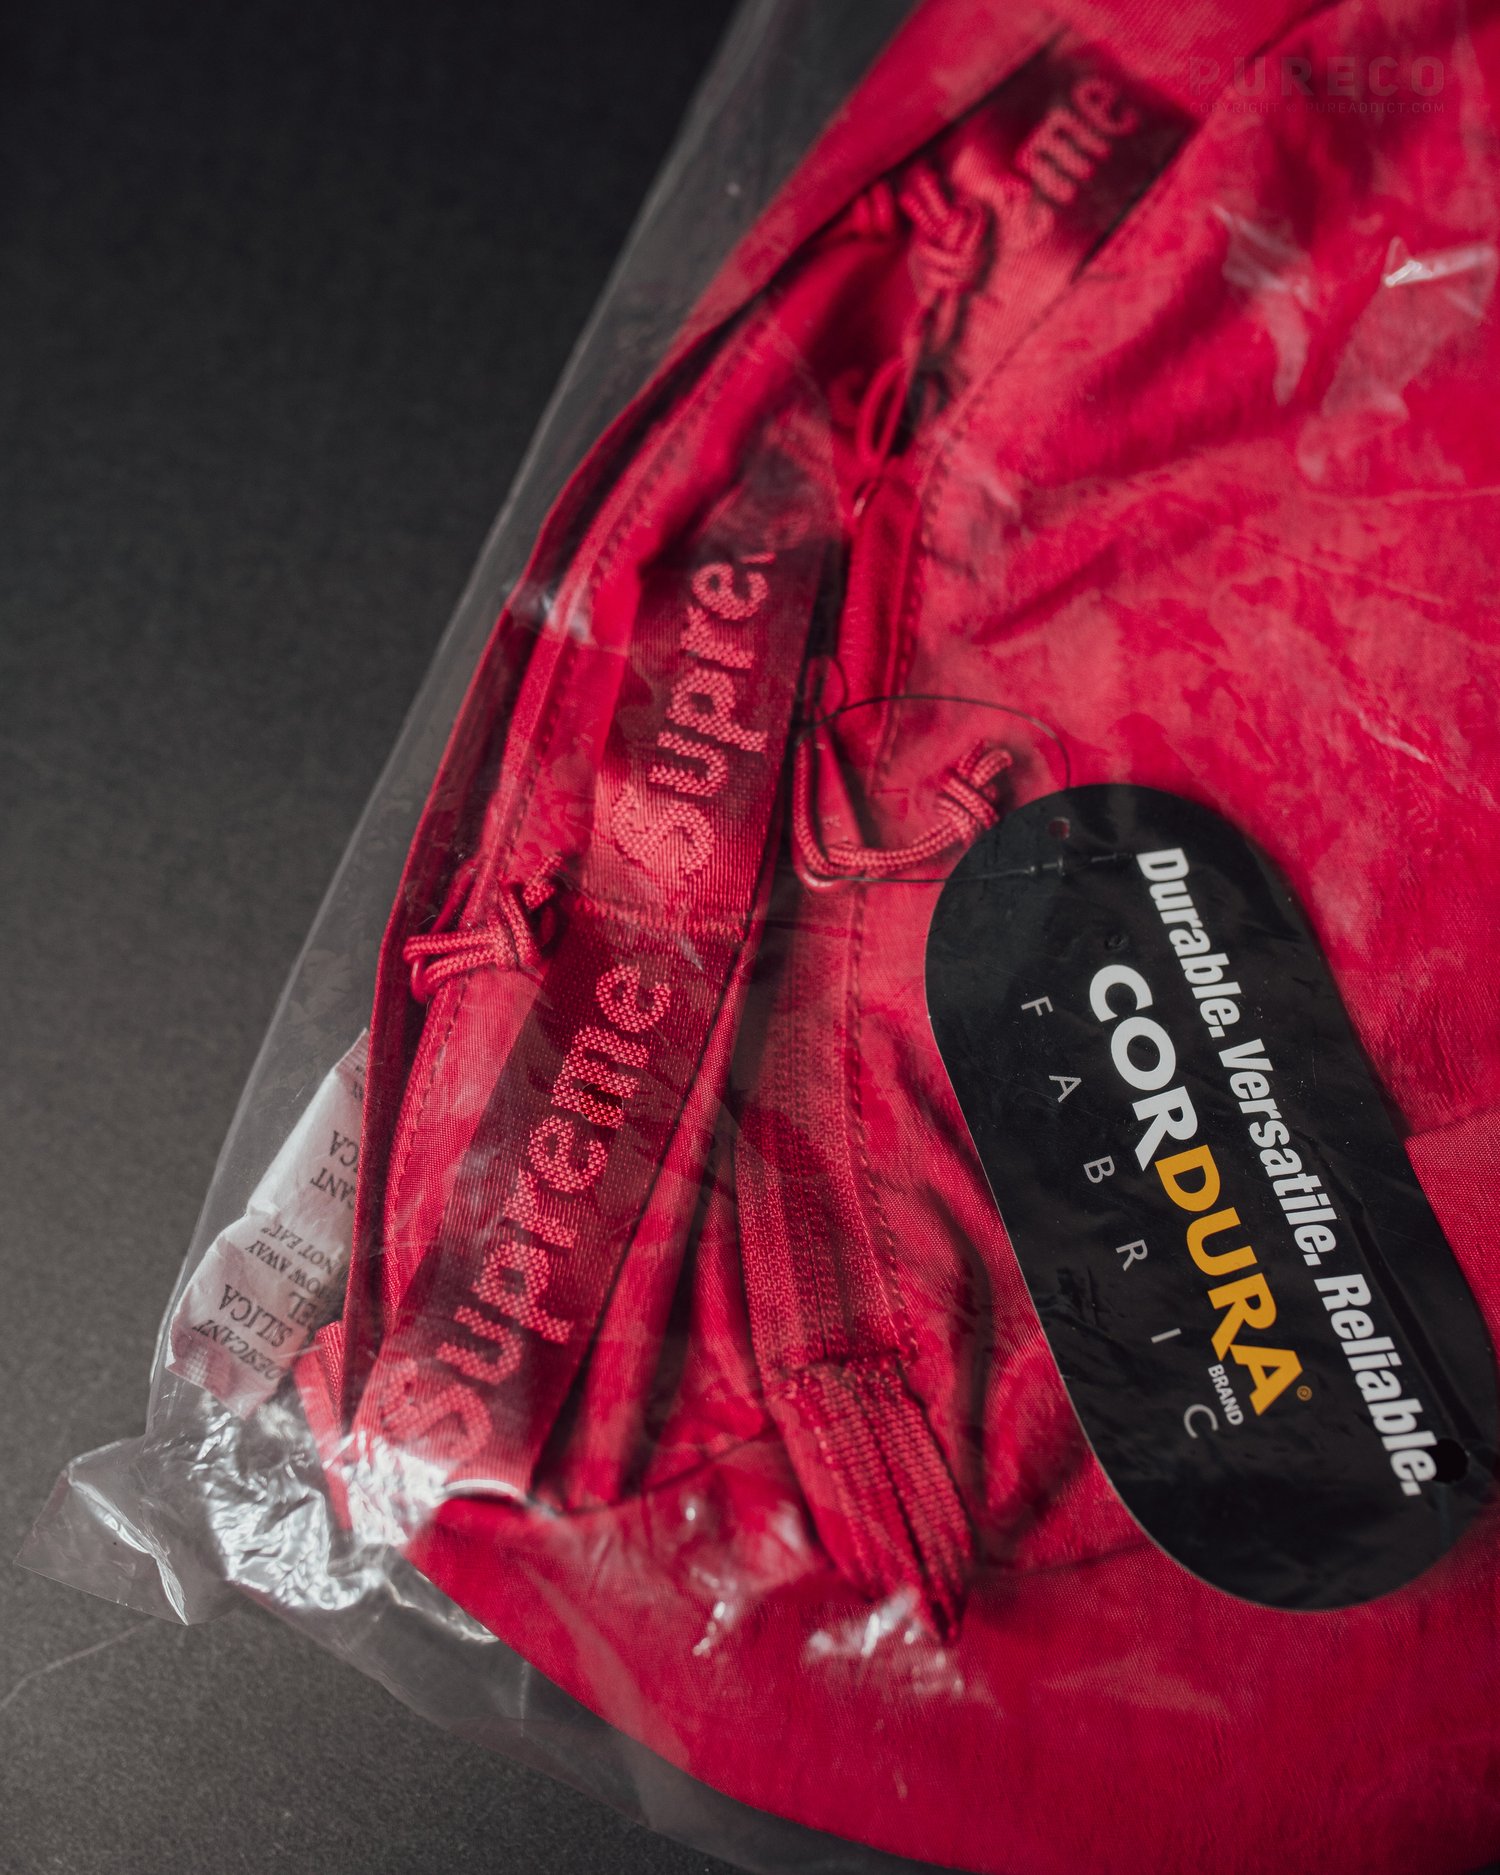 Buy Supreme Leather Women's Sling Bag (Red,Medium, SP10_Medium) at